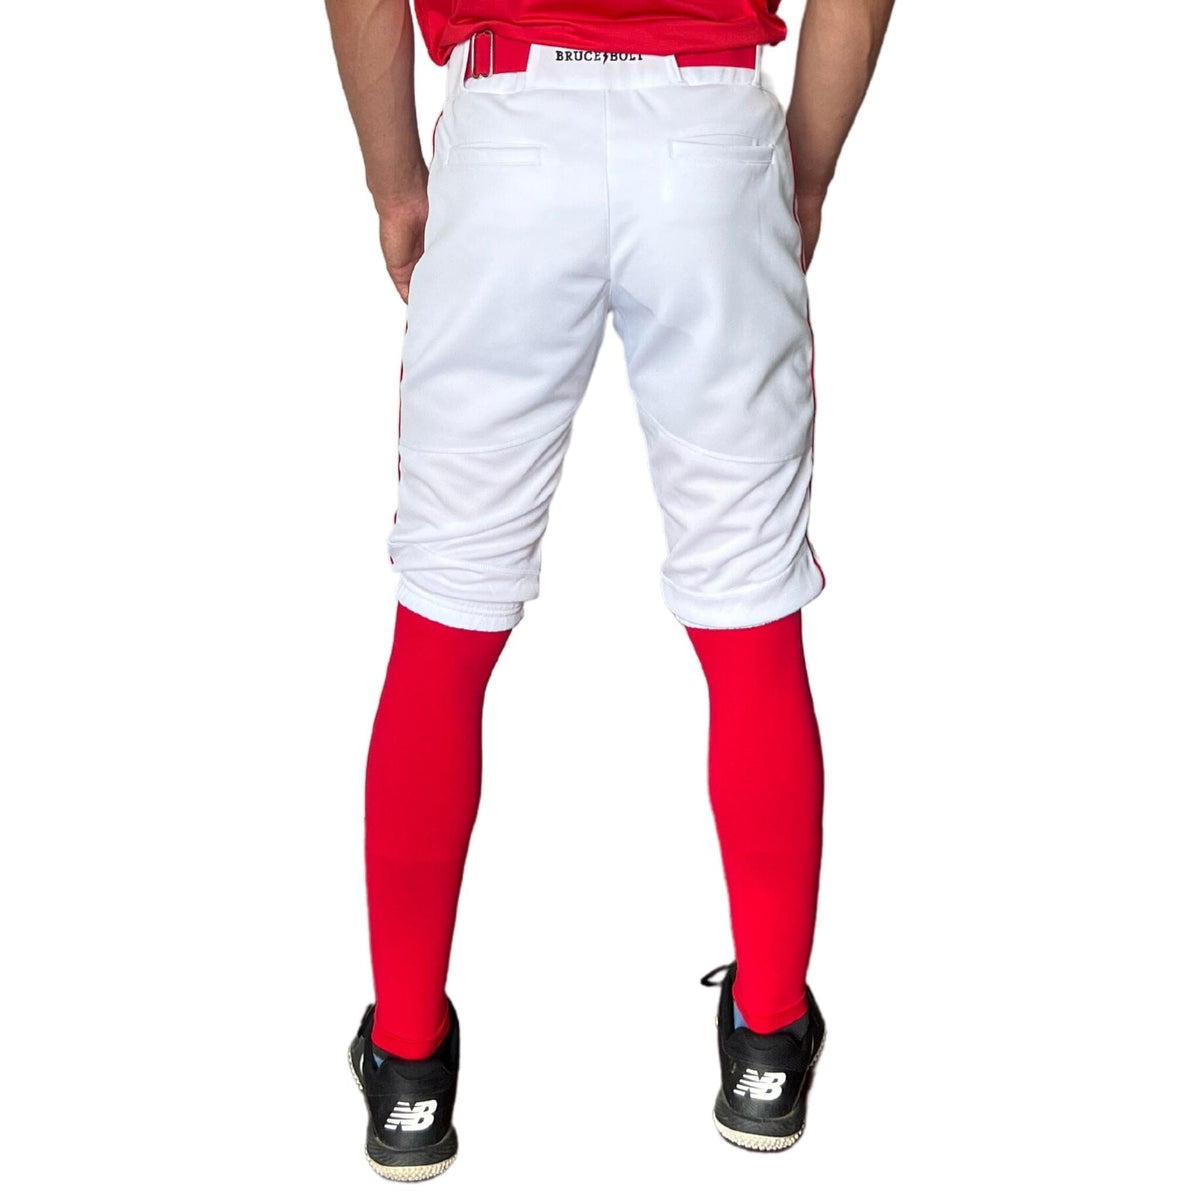 BRUCE BOLT Premium Pro Baseball Pant - WHITE